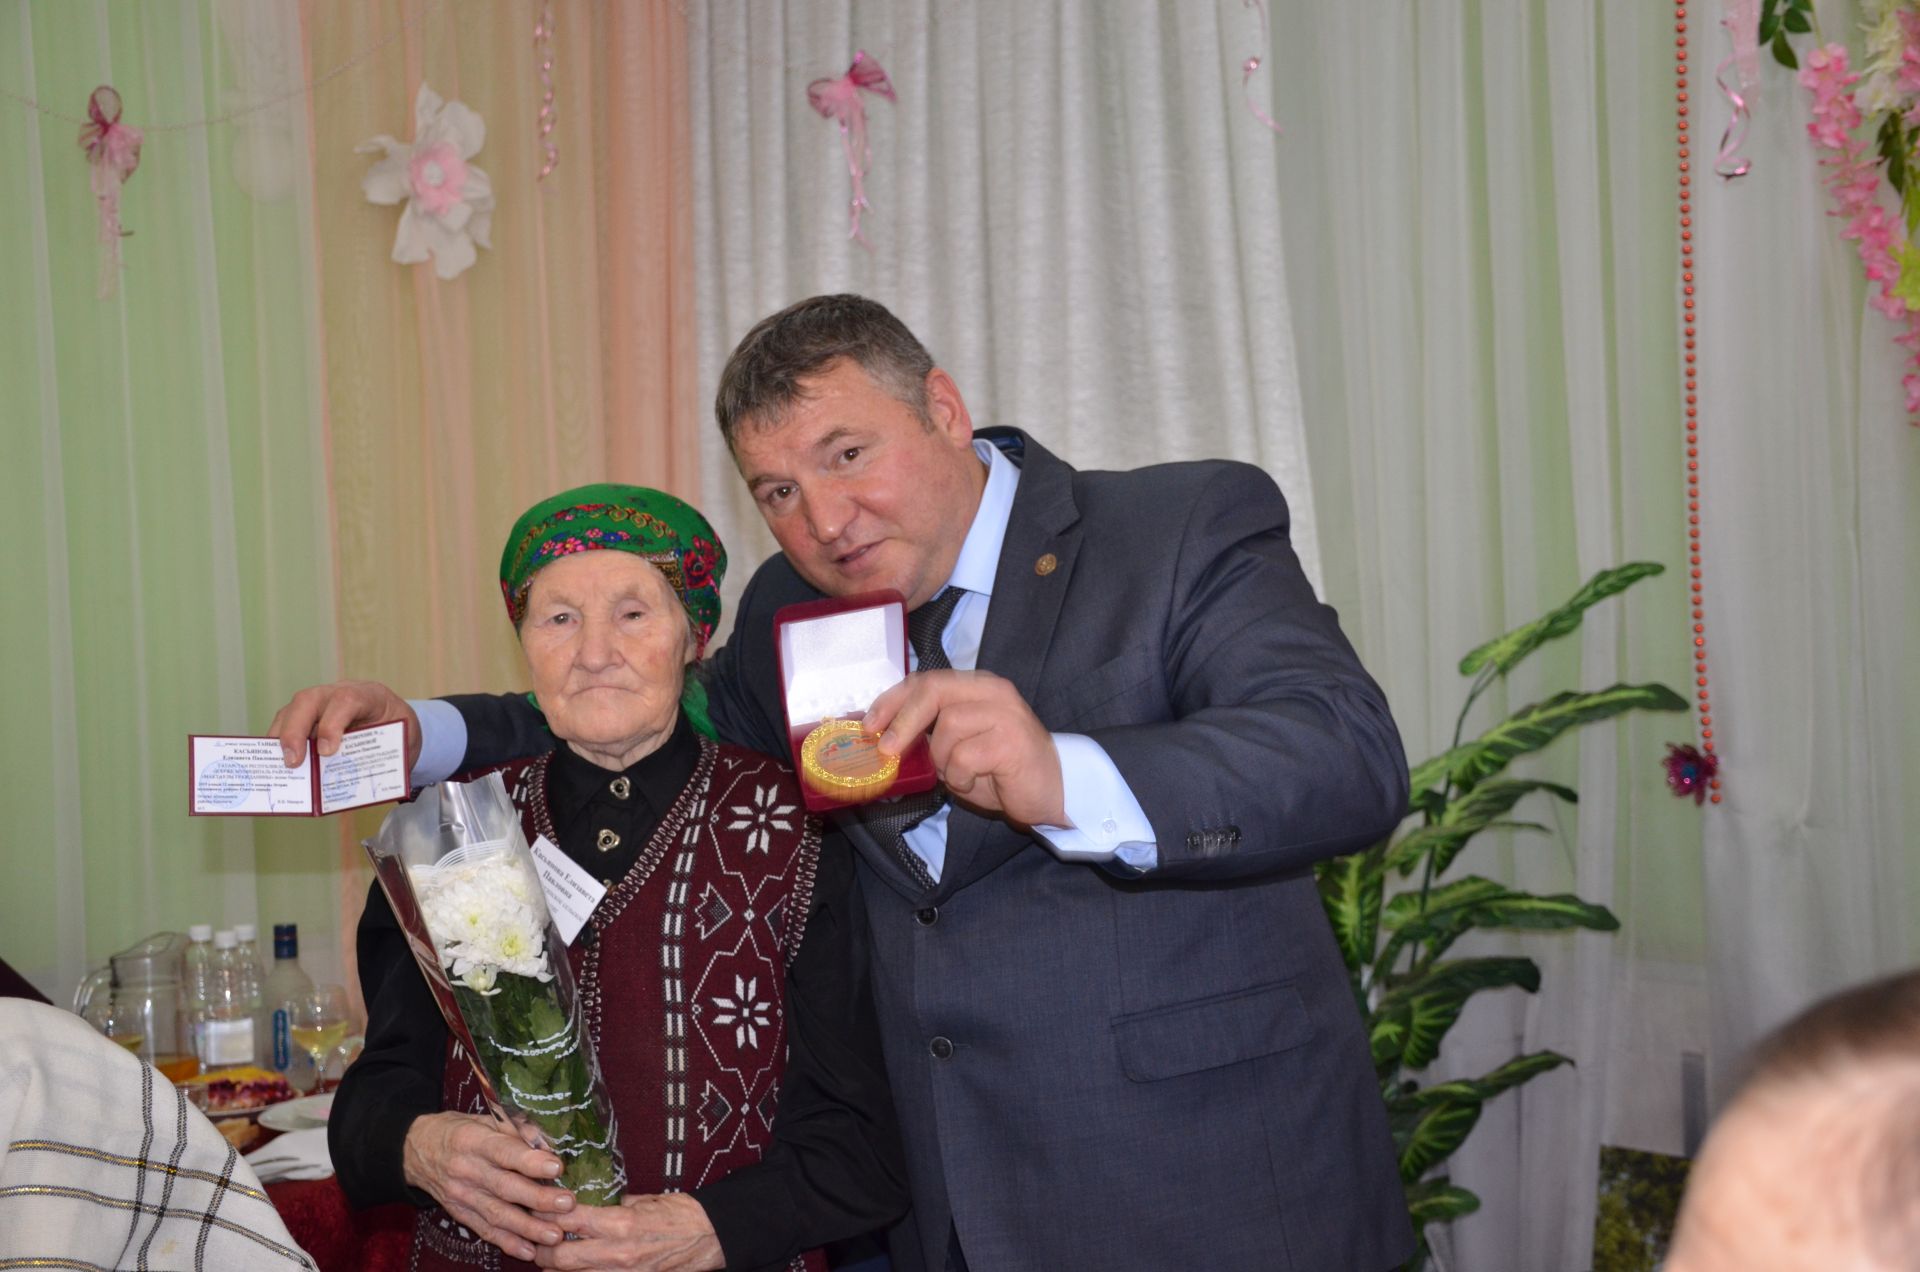 Әгерҗе районының авыл хуҗалыгы ветераннары медаль һәм таныклык алды